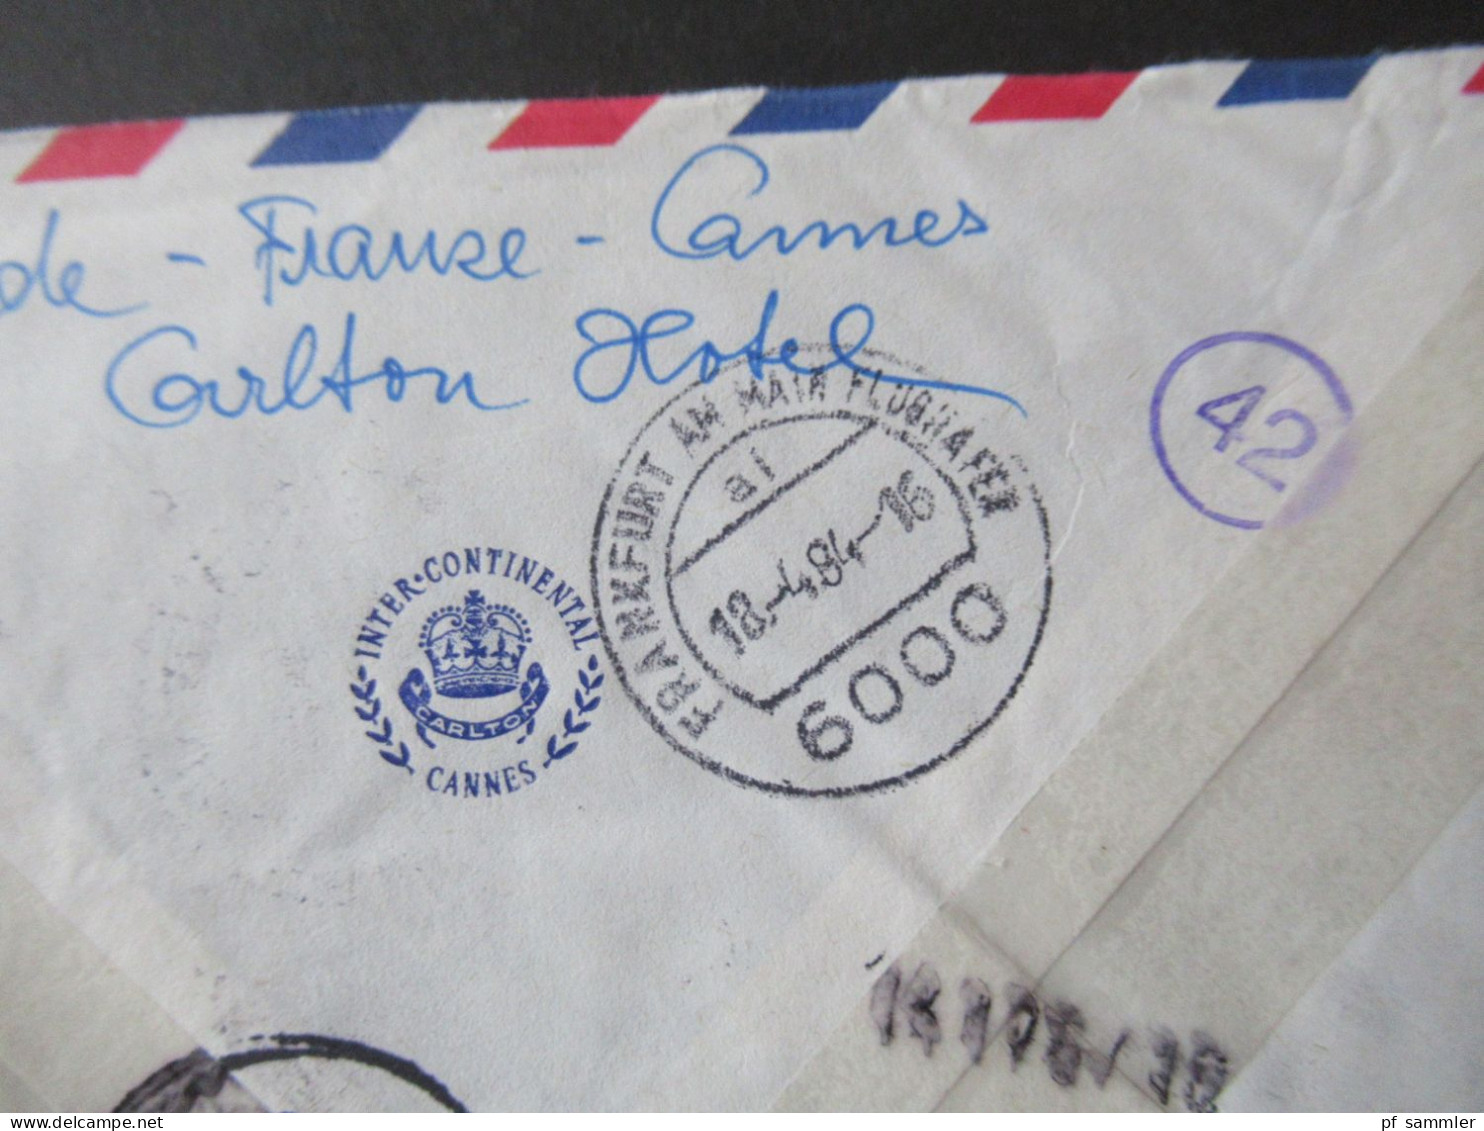 Frankreich 1984 Par Avion Expres Cannes - Kassel / Stempel Frankfurt Am Main Flughafen / Umschlag Inter Continental - Storia Postale